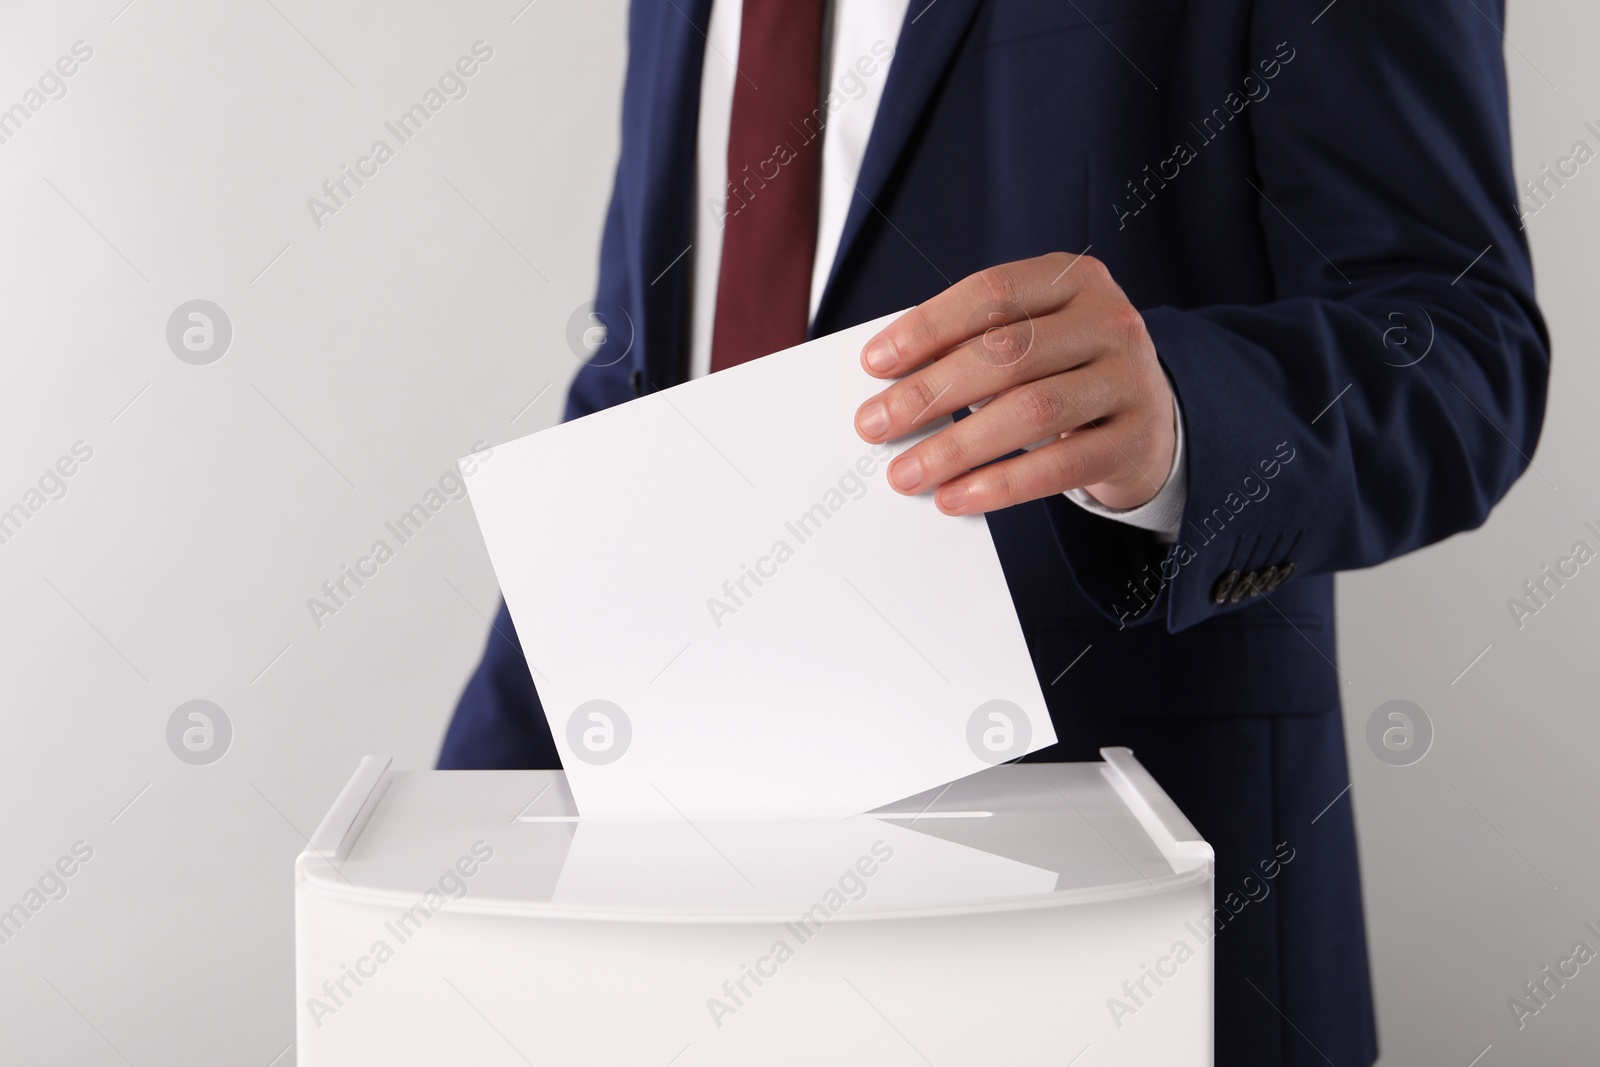 Photo of Man putting his vote into ballot box on light grey background, closeup